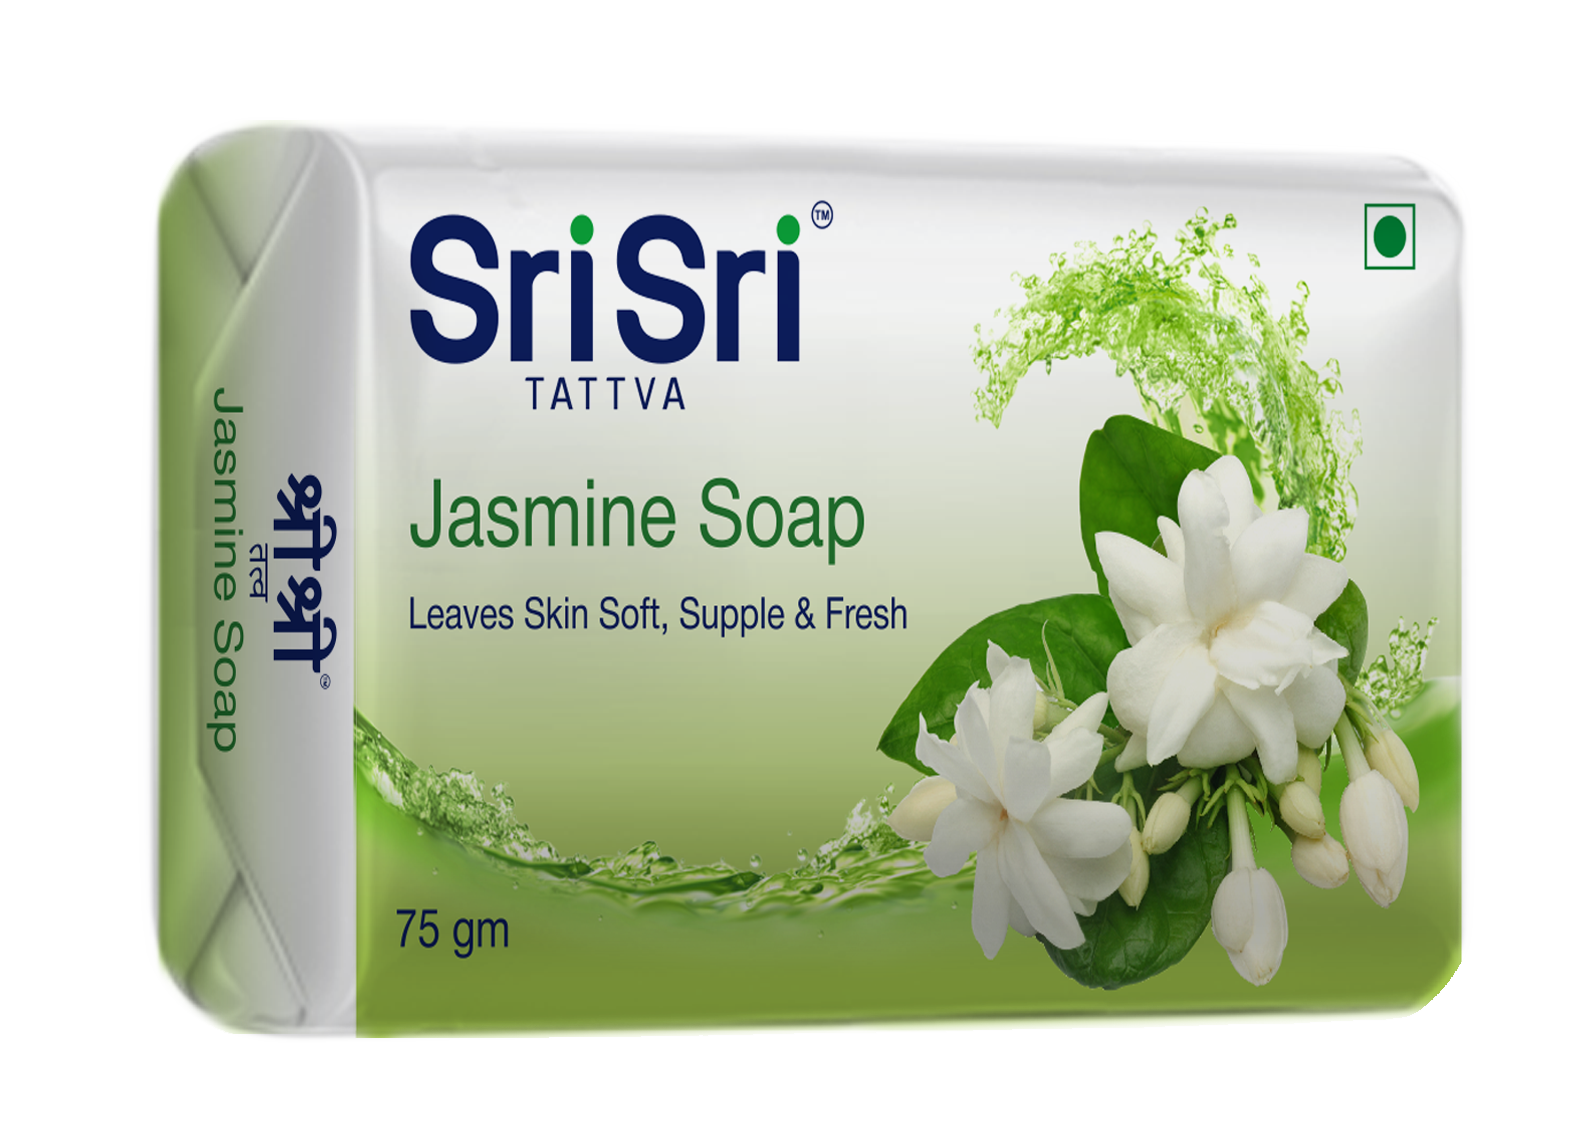 Sri Sri Tattva Jasmine Soap